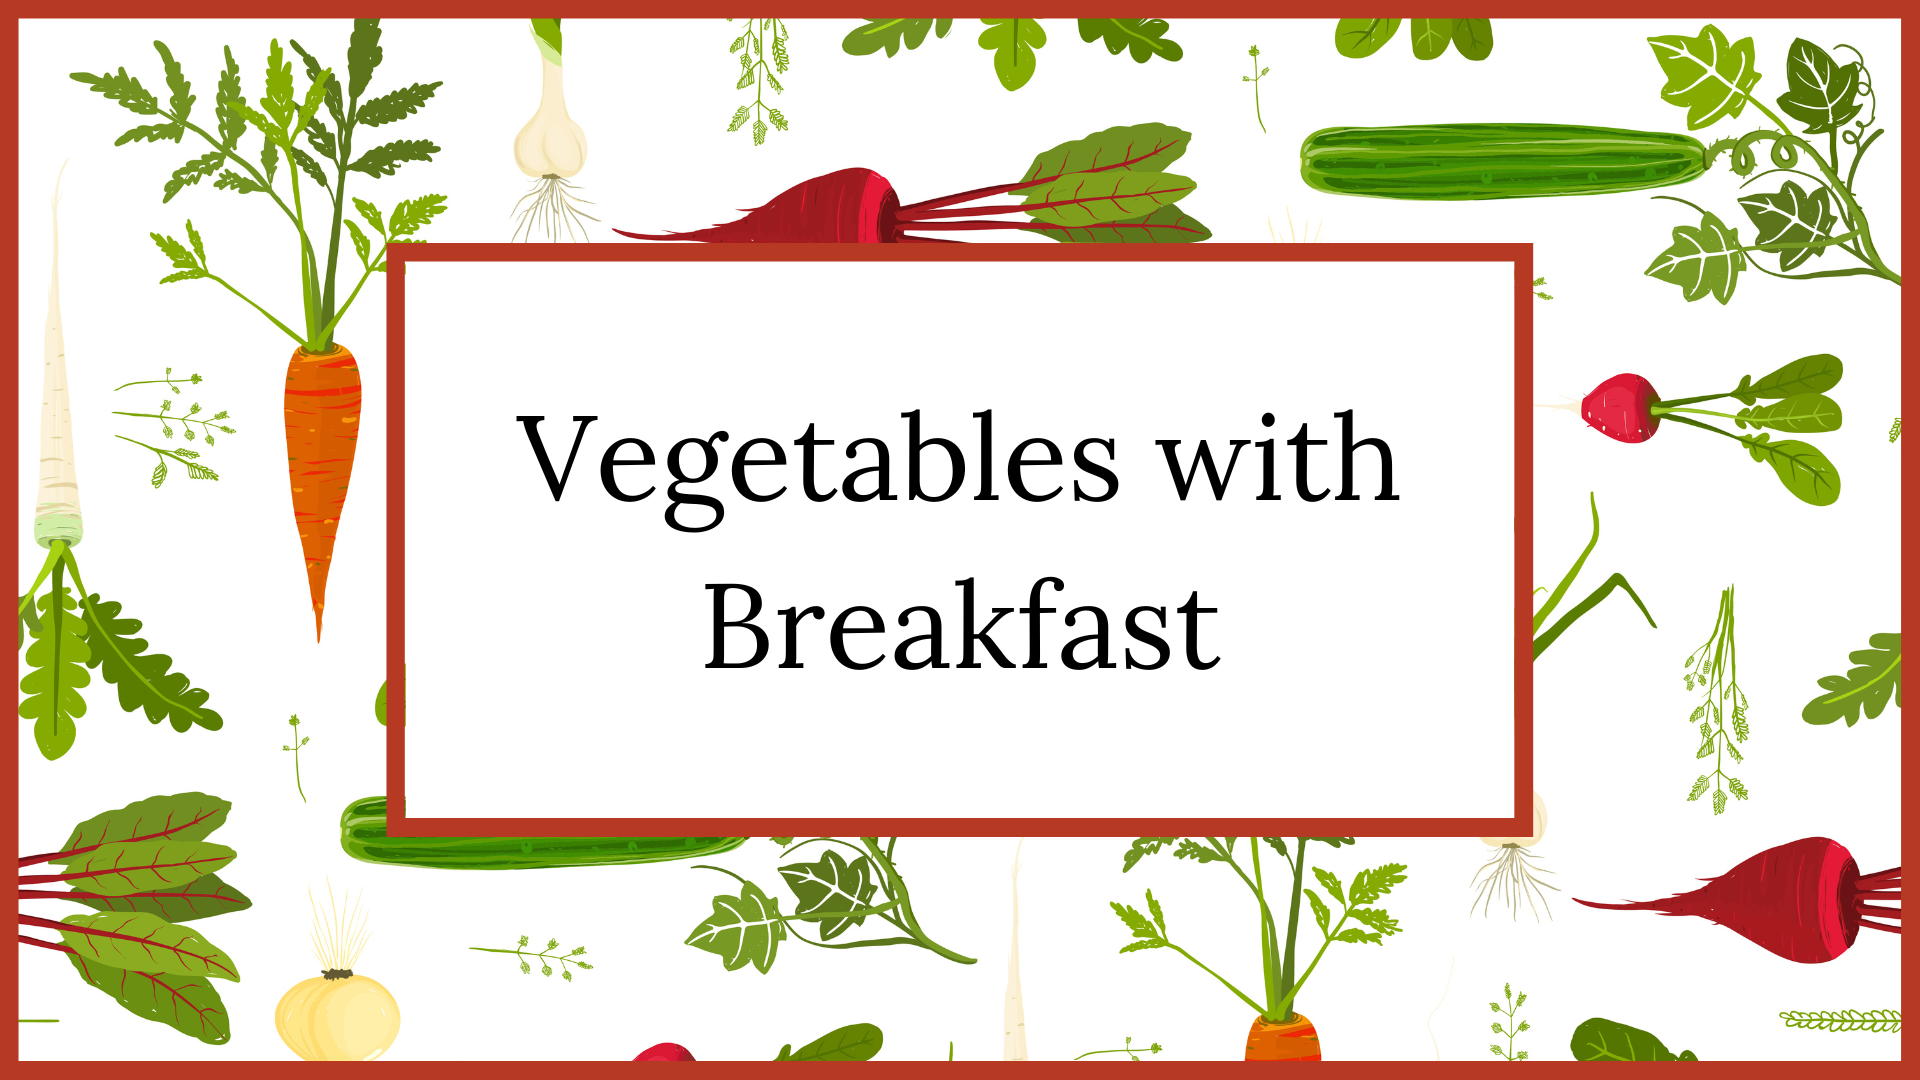 Vegetables with Breakfast Challenge